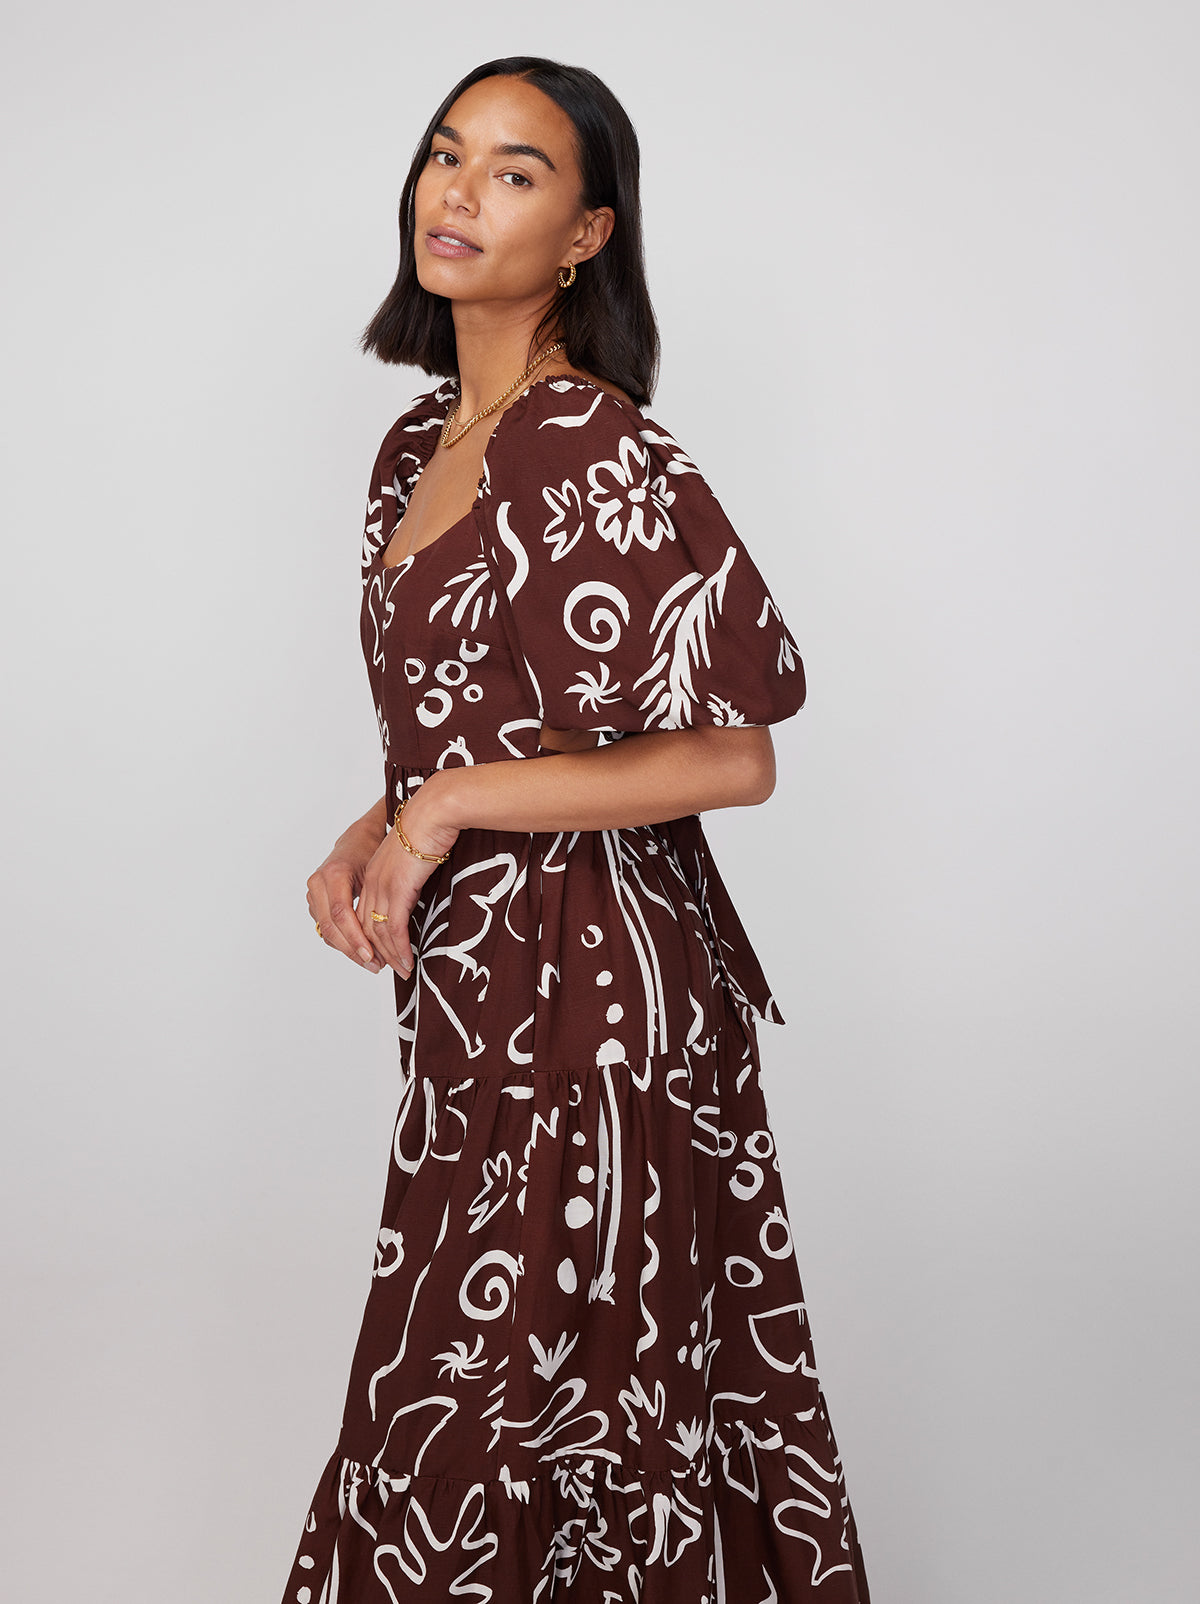 Gianna Coco Palm Print Maxi Dress By KITRI Studio